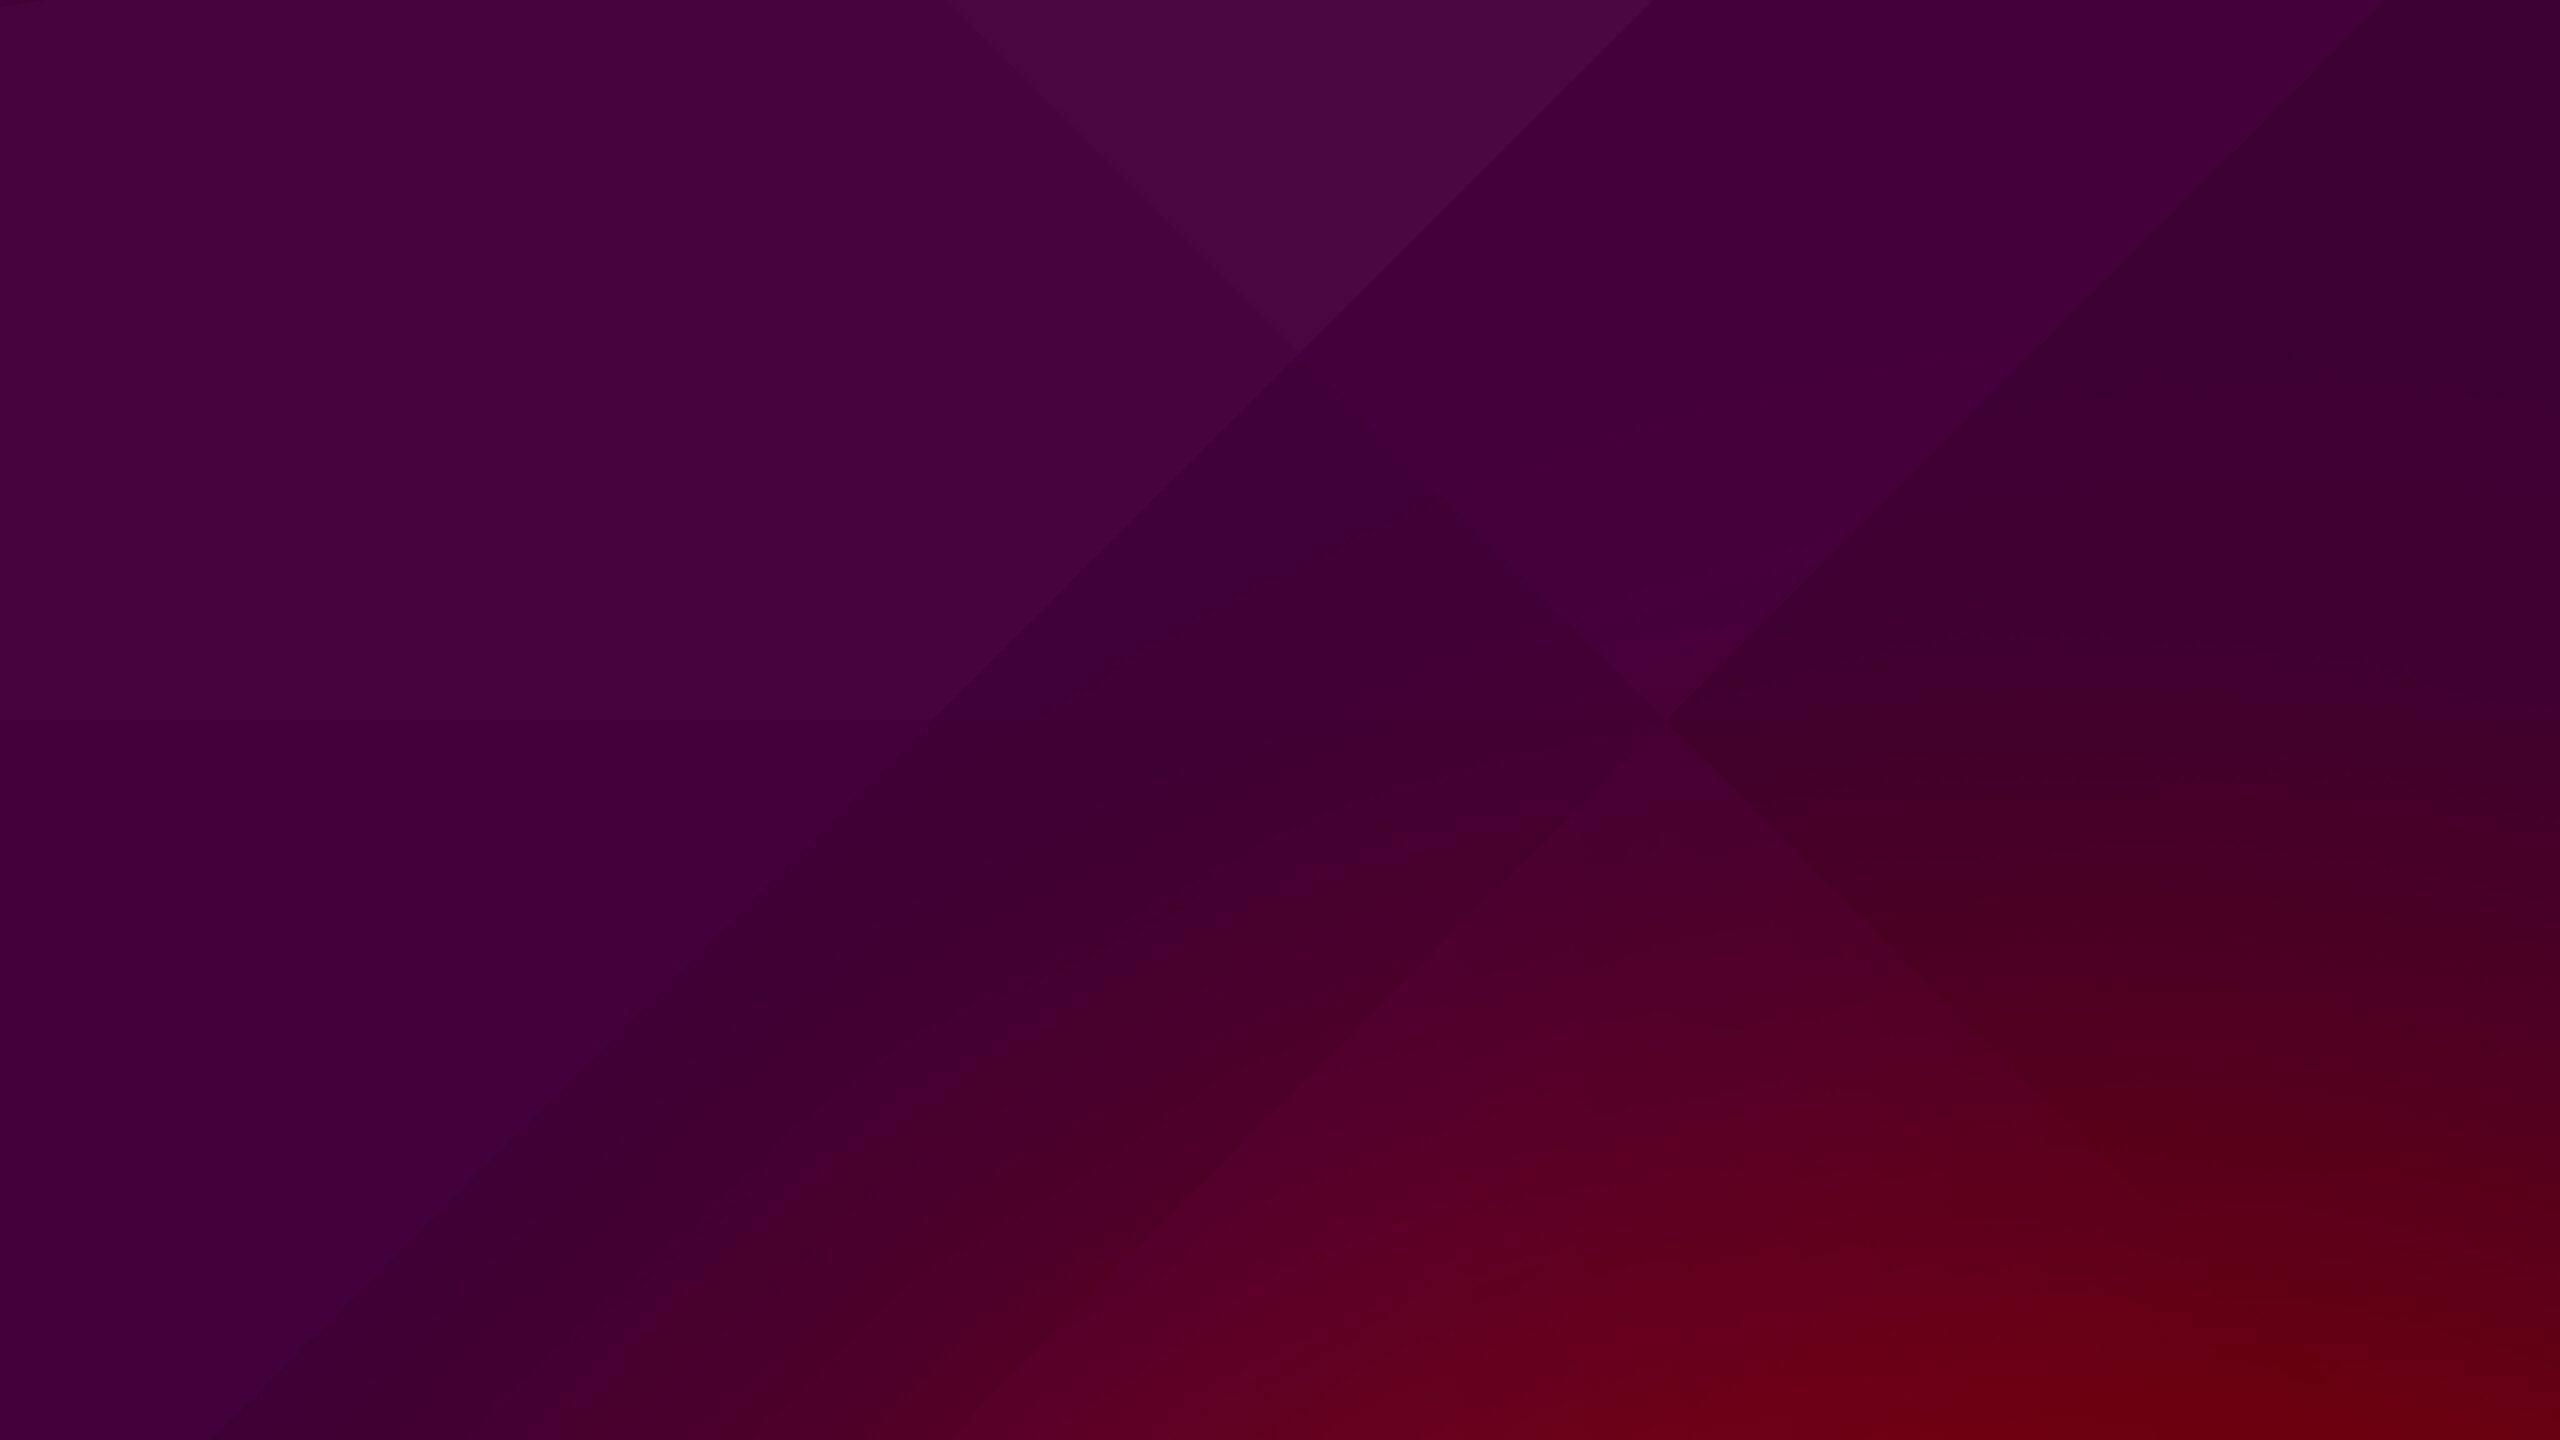 Ubuntu-15-04-Suru-Wallpaper